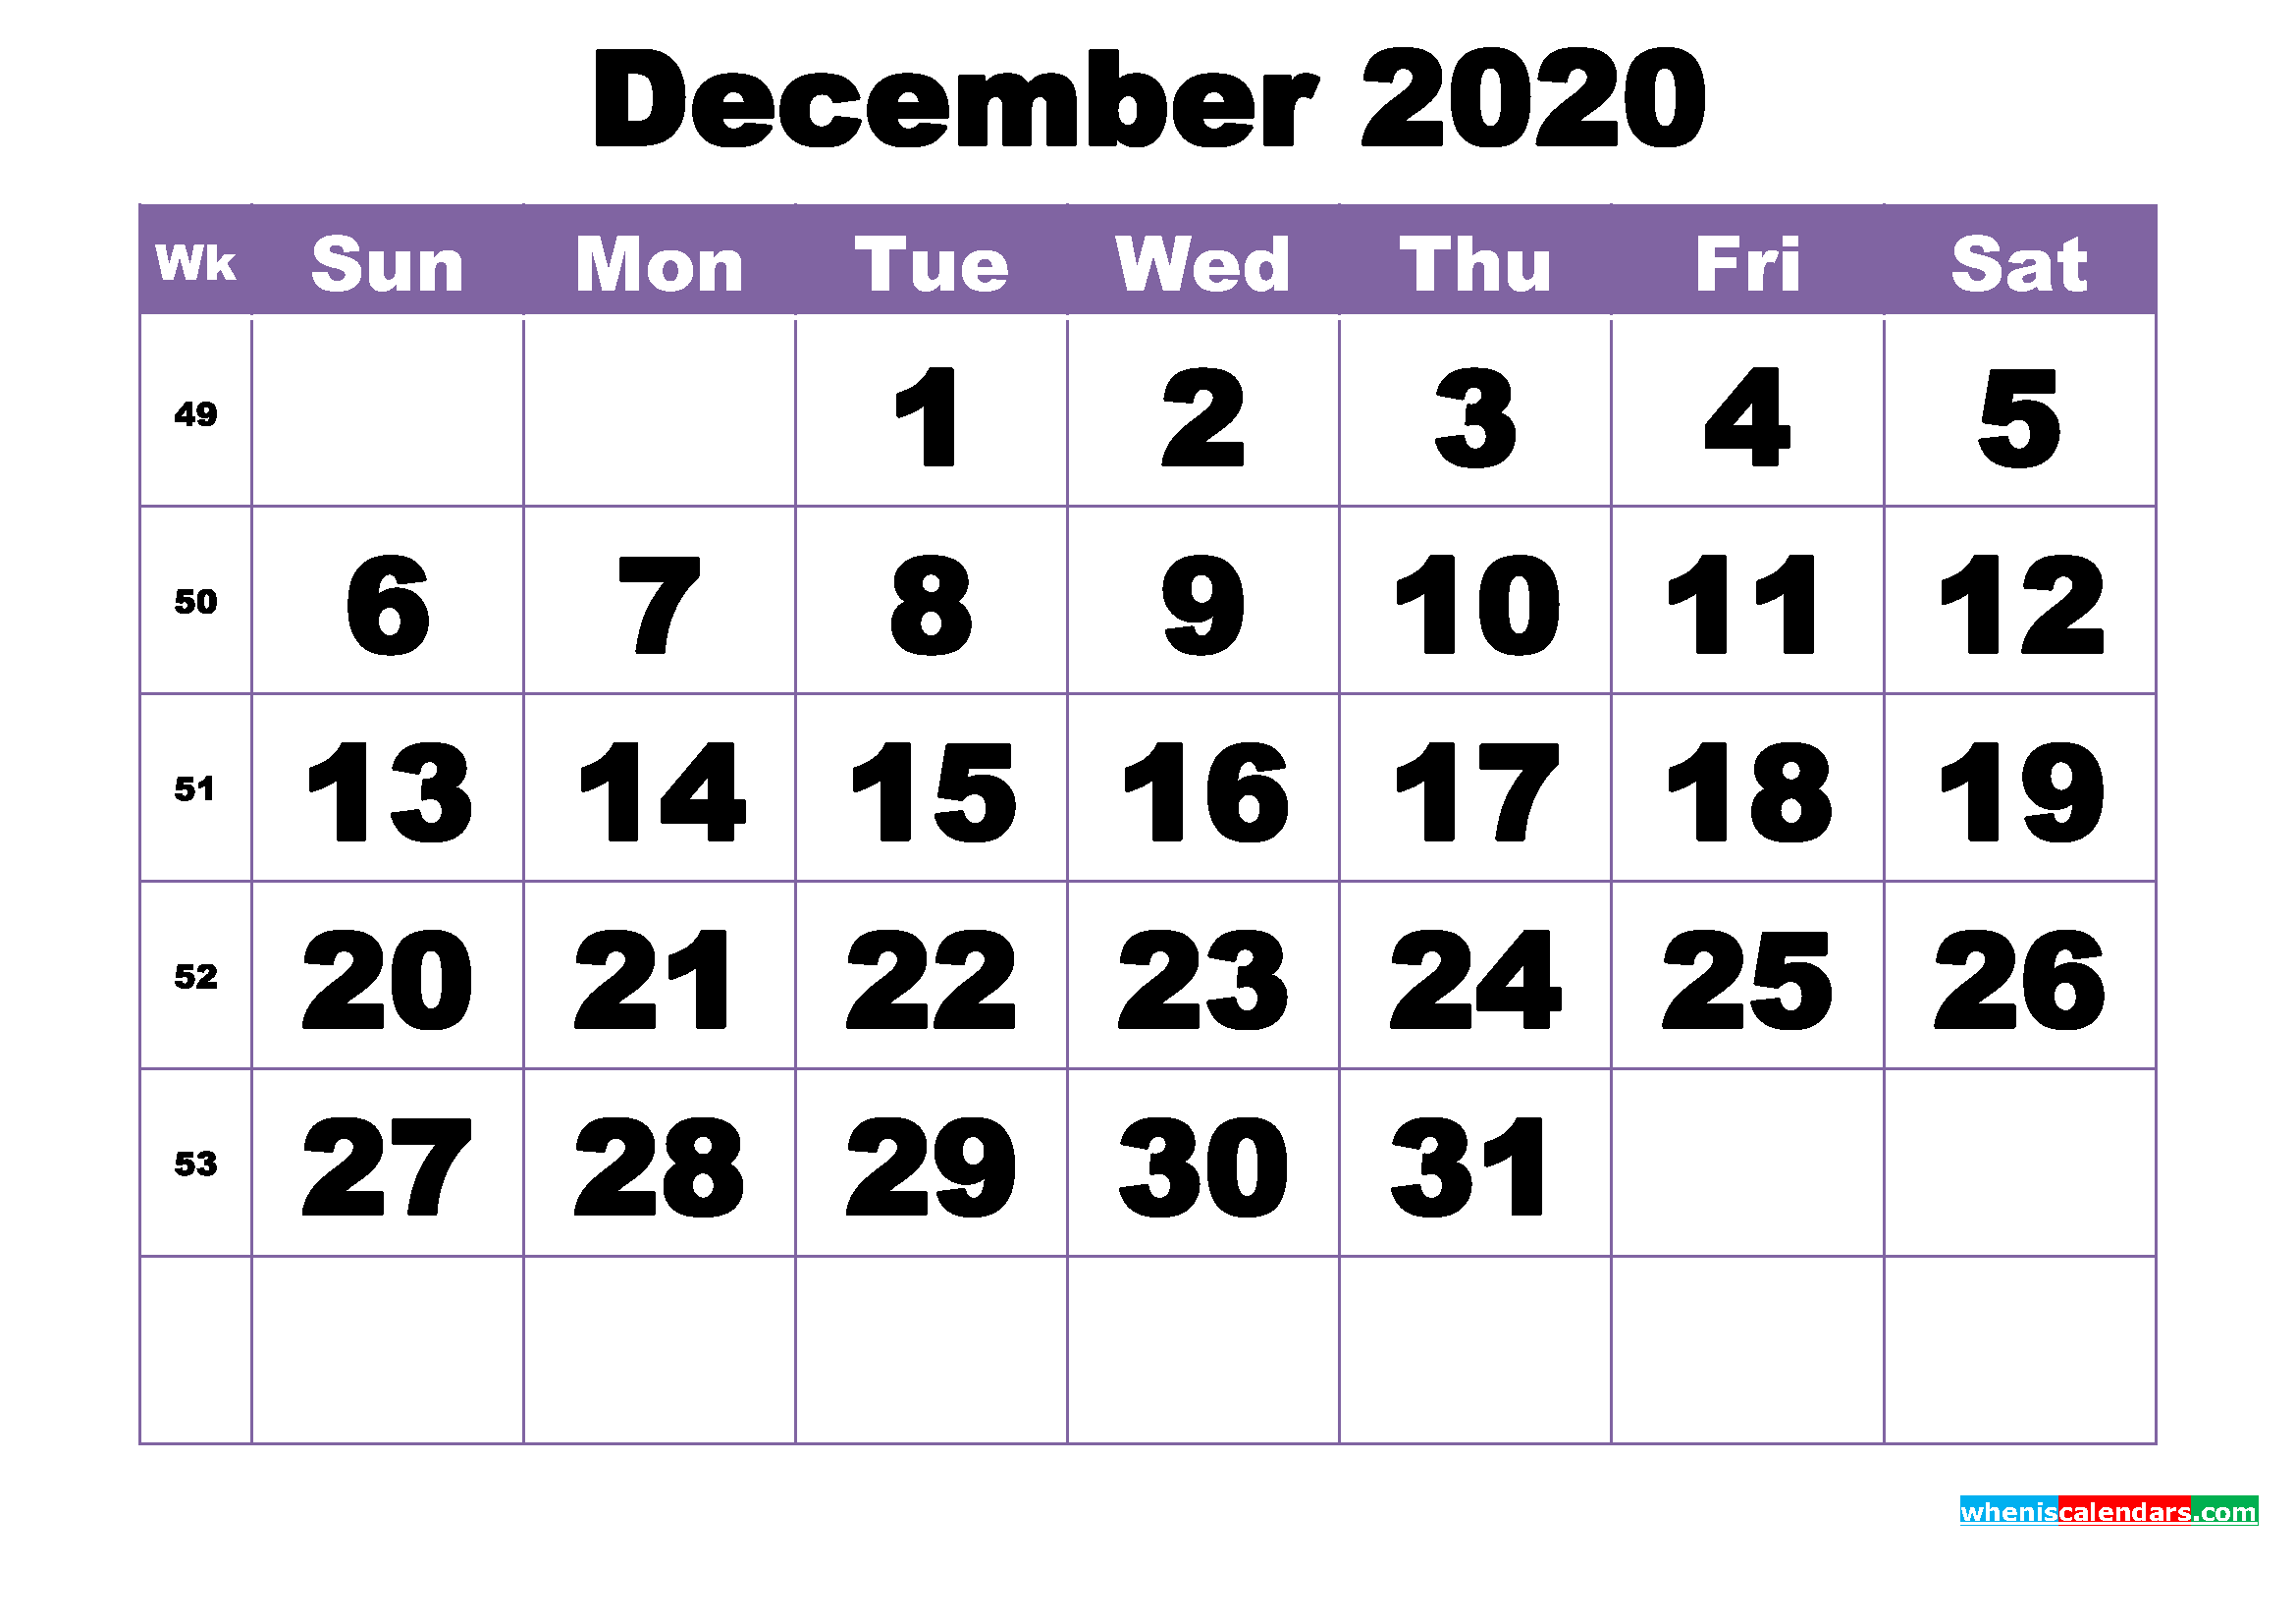 December 2020 Printable Calendar Template